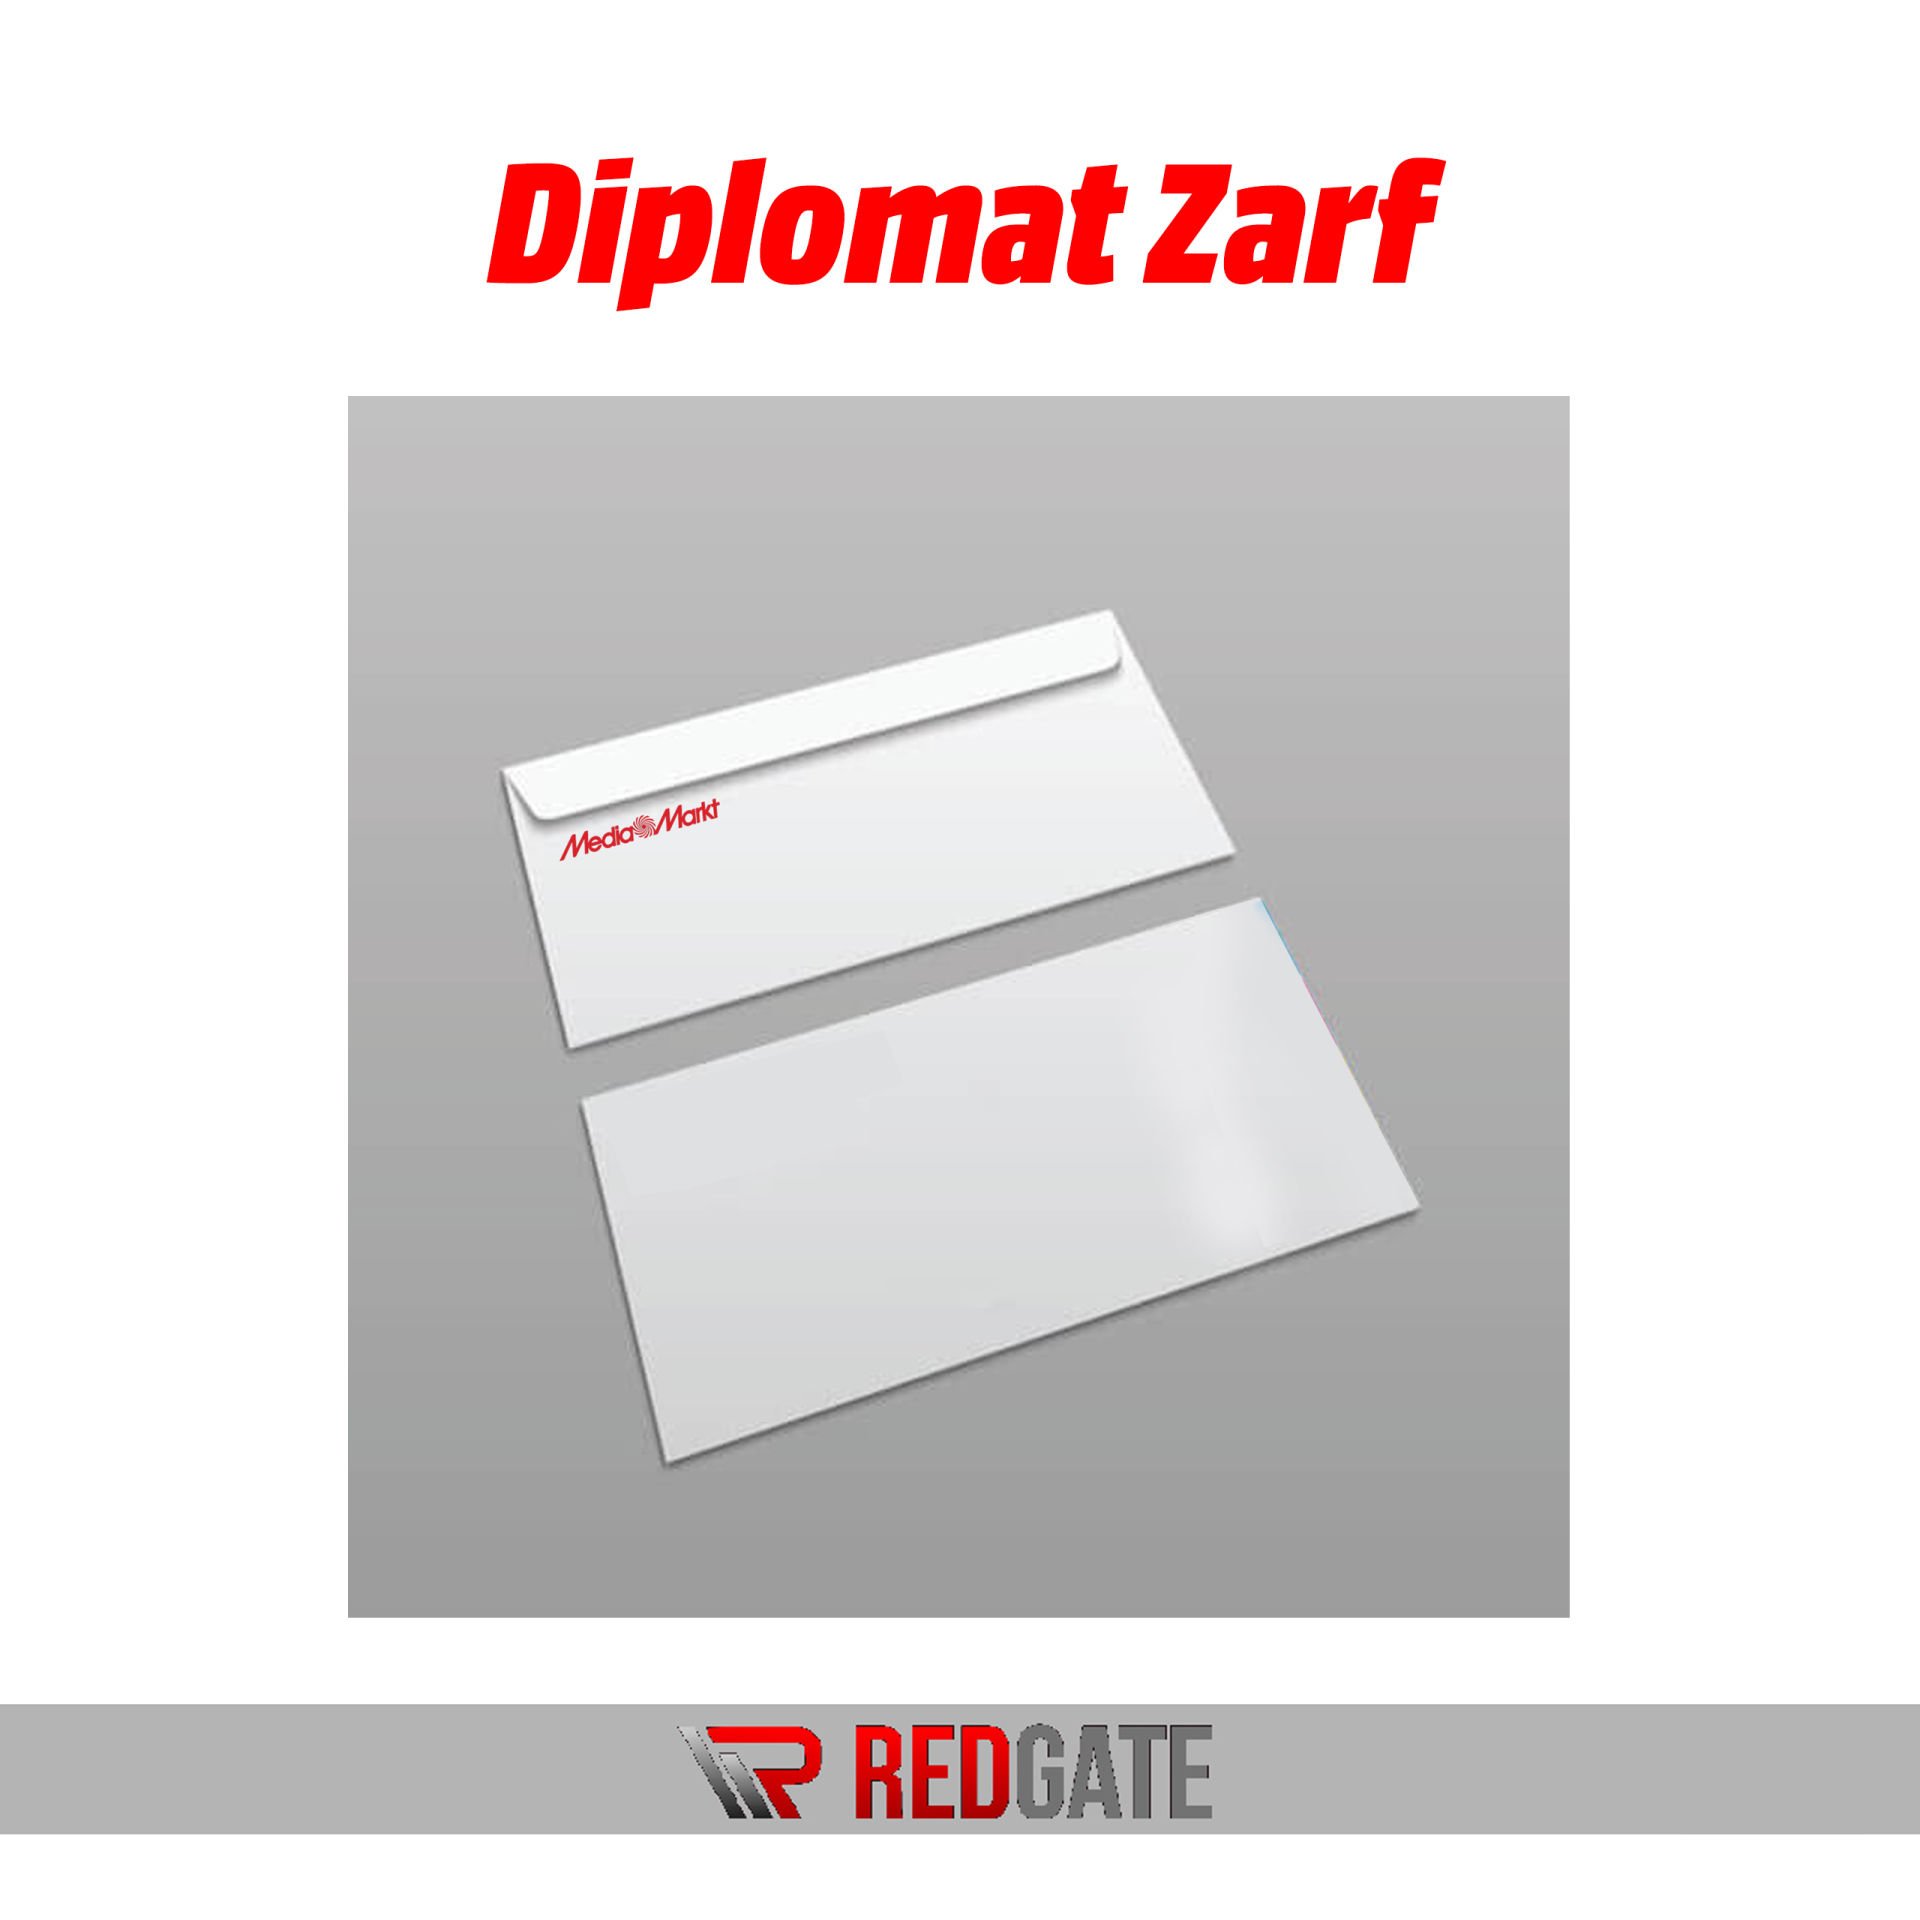 Diplomat Zarf 10,5x24 cm Penceresiz Renkli Baskı